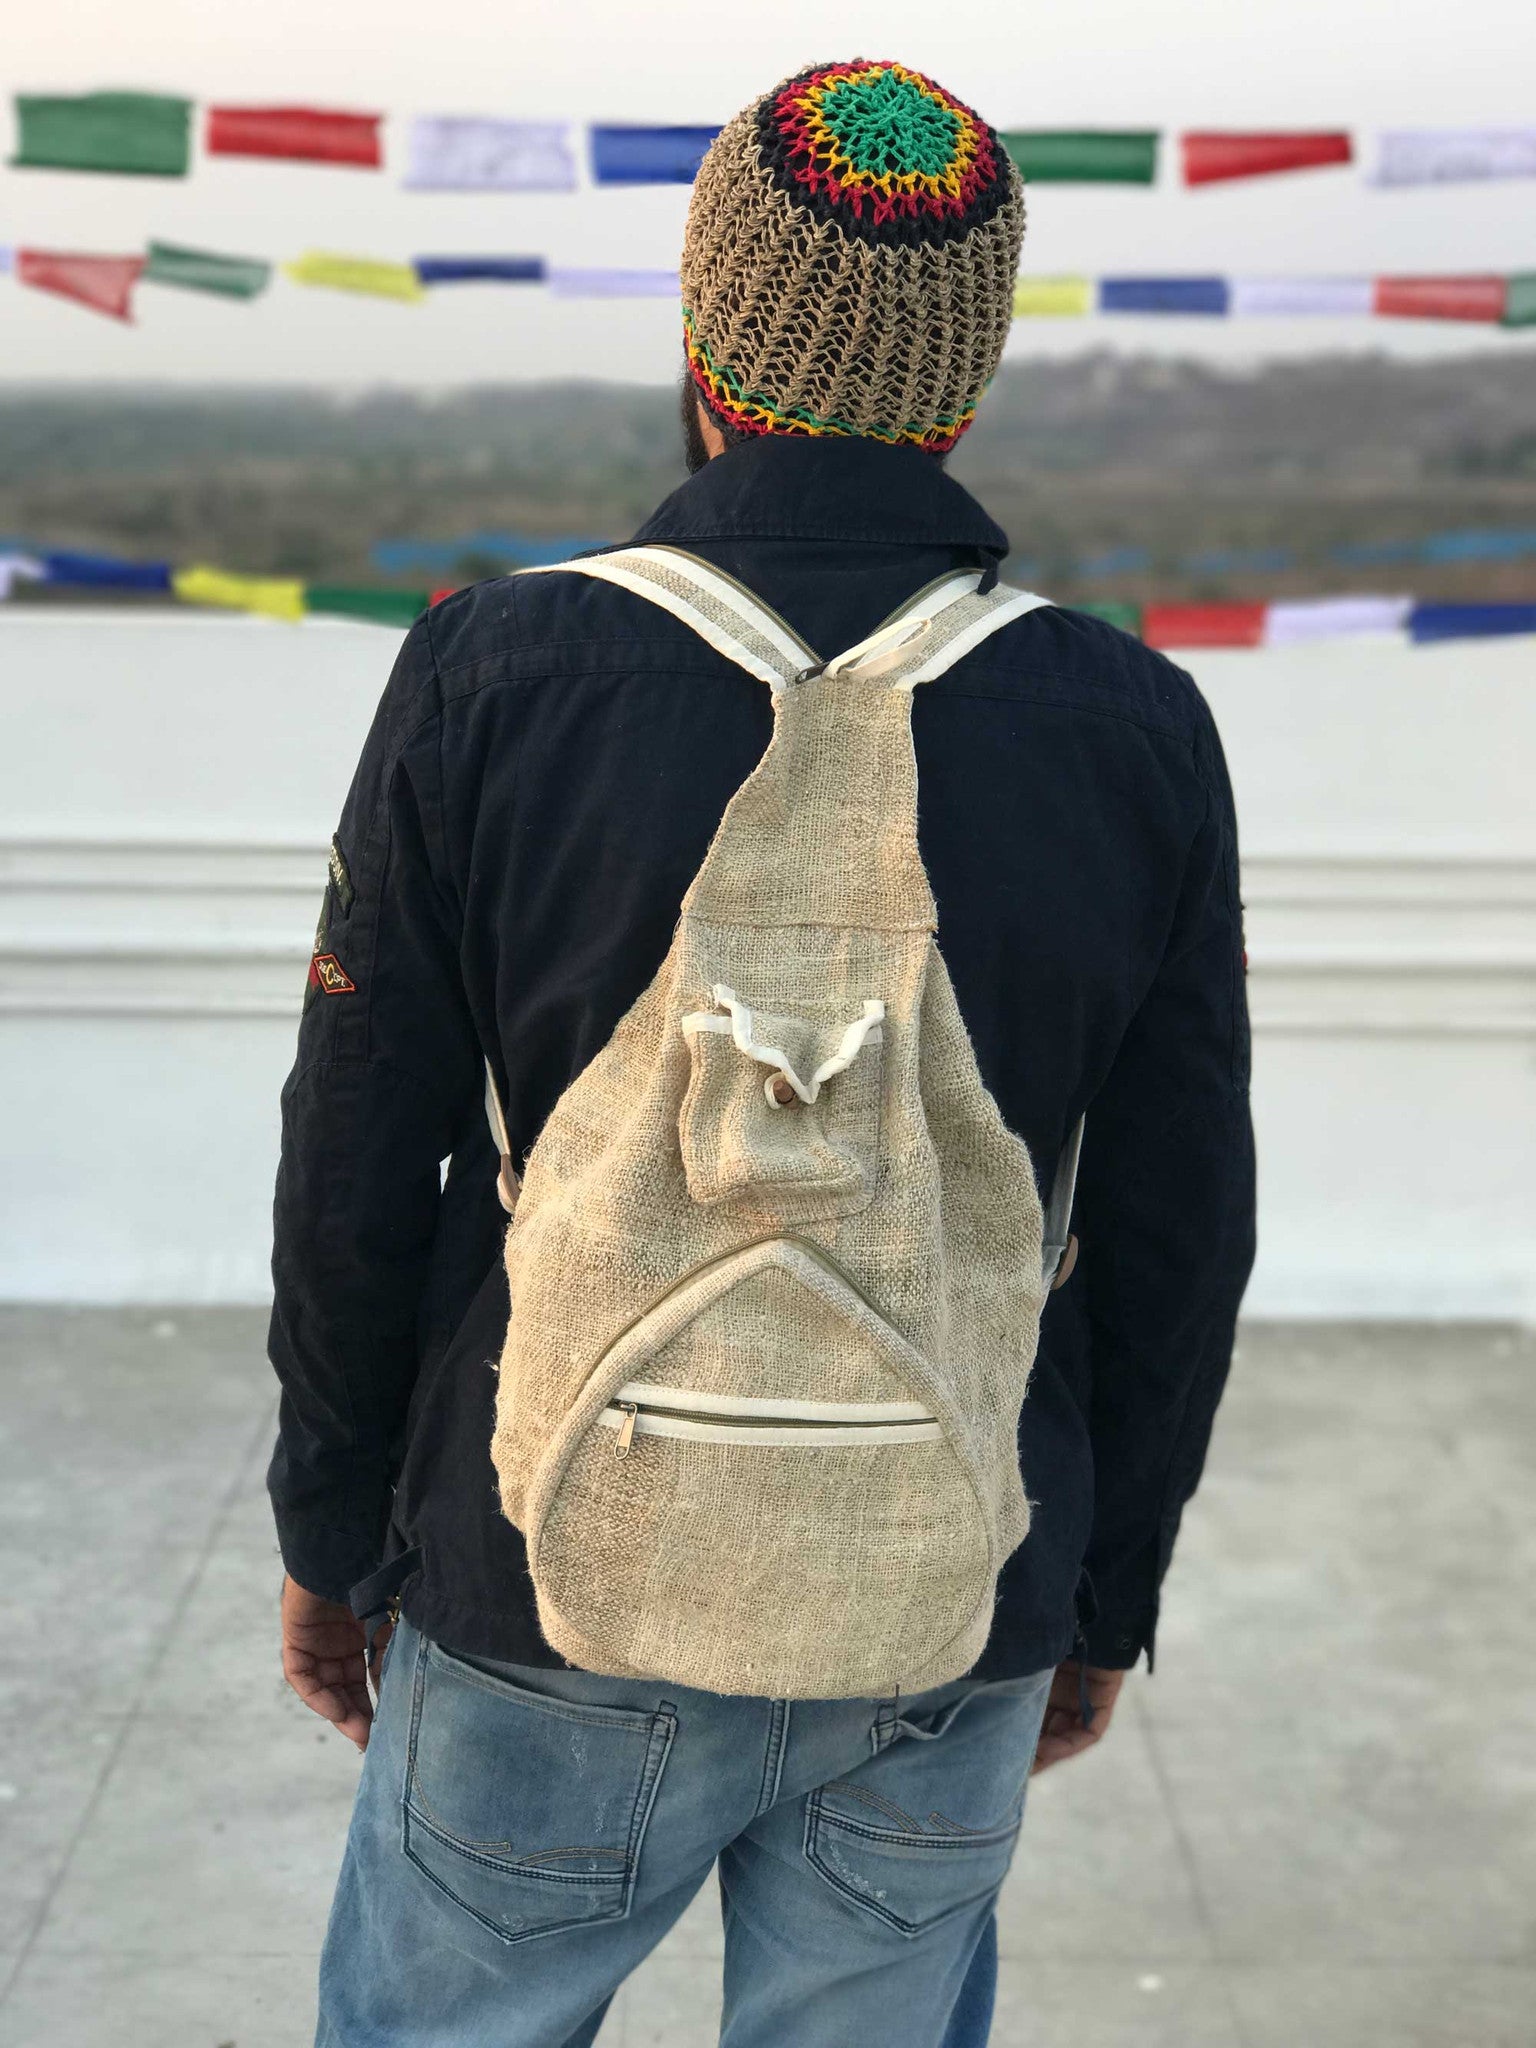 HEMP Magic Travel Bag made from 100% natural, organic and eco-friendly handwoven HEMP